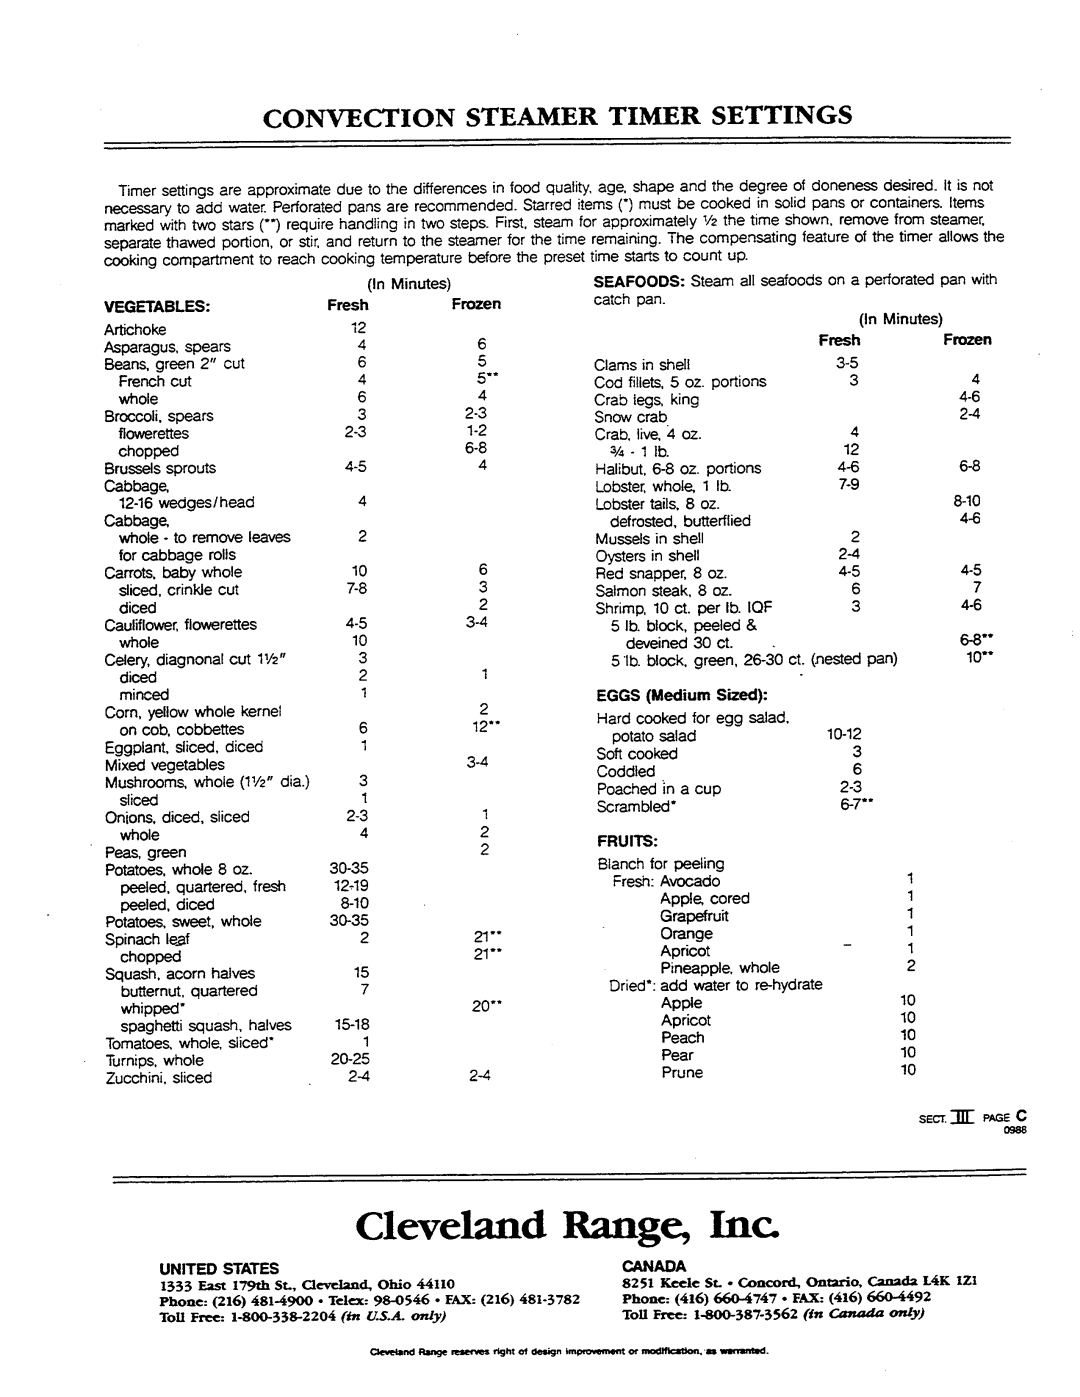 Cleveland Range 36CDM16, 36CGM16, 36CSM16 service manual 